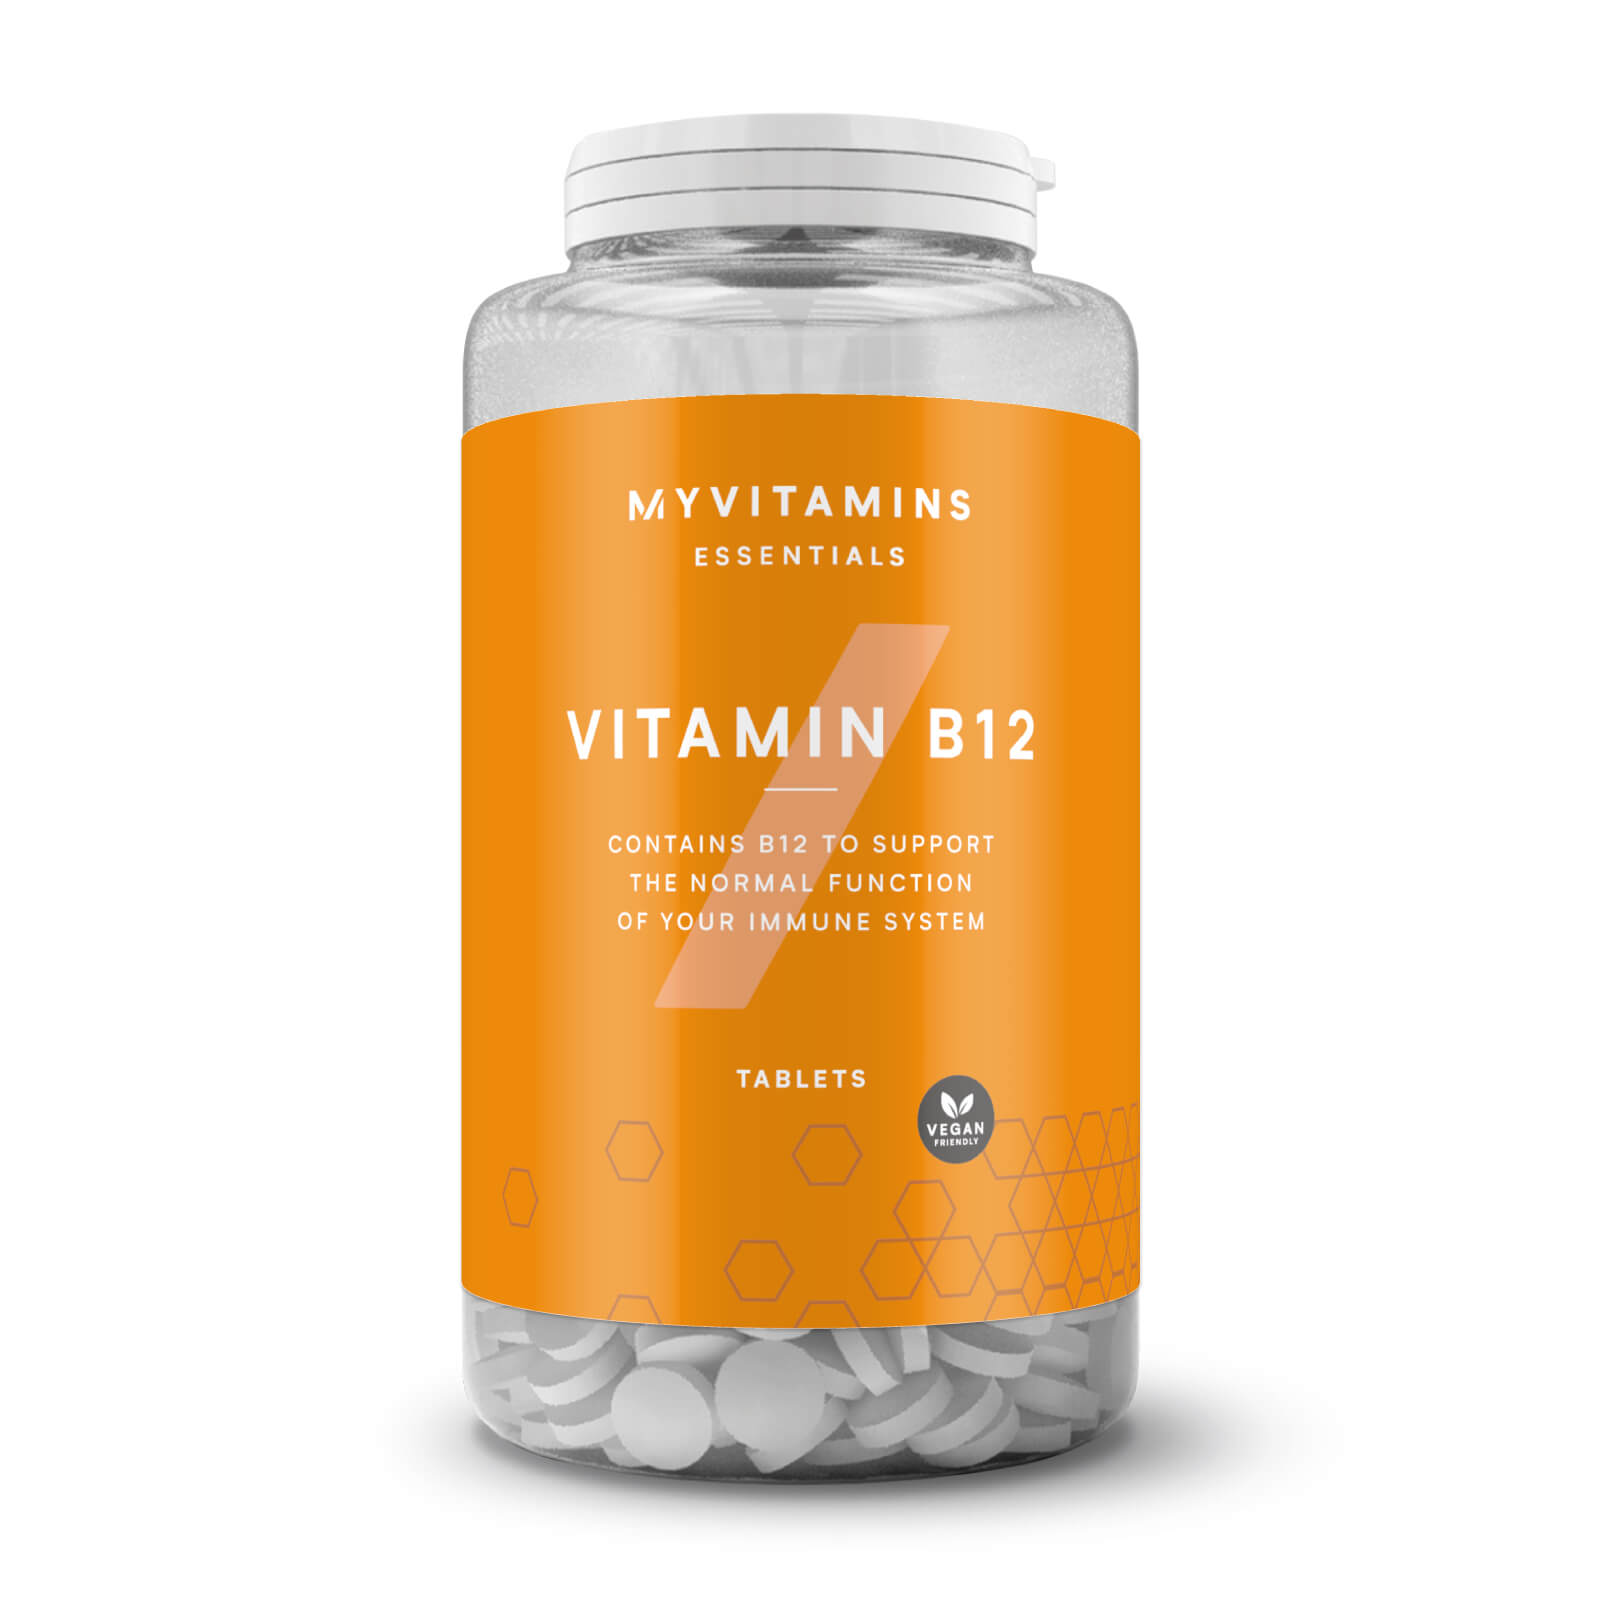 myvitamins UK Myvitamins Vitamin B12 Tablets - 60Tablets